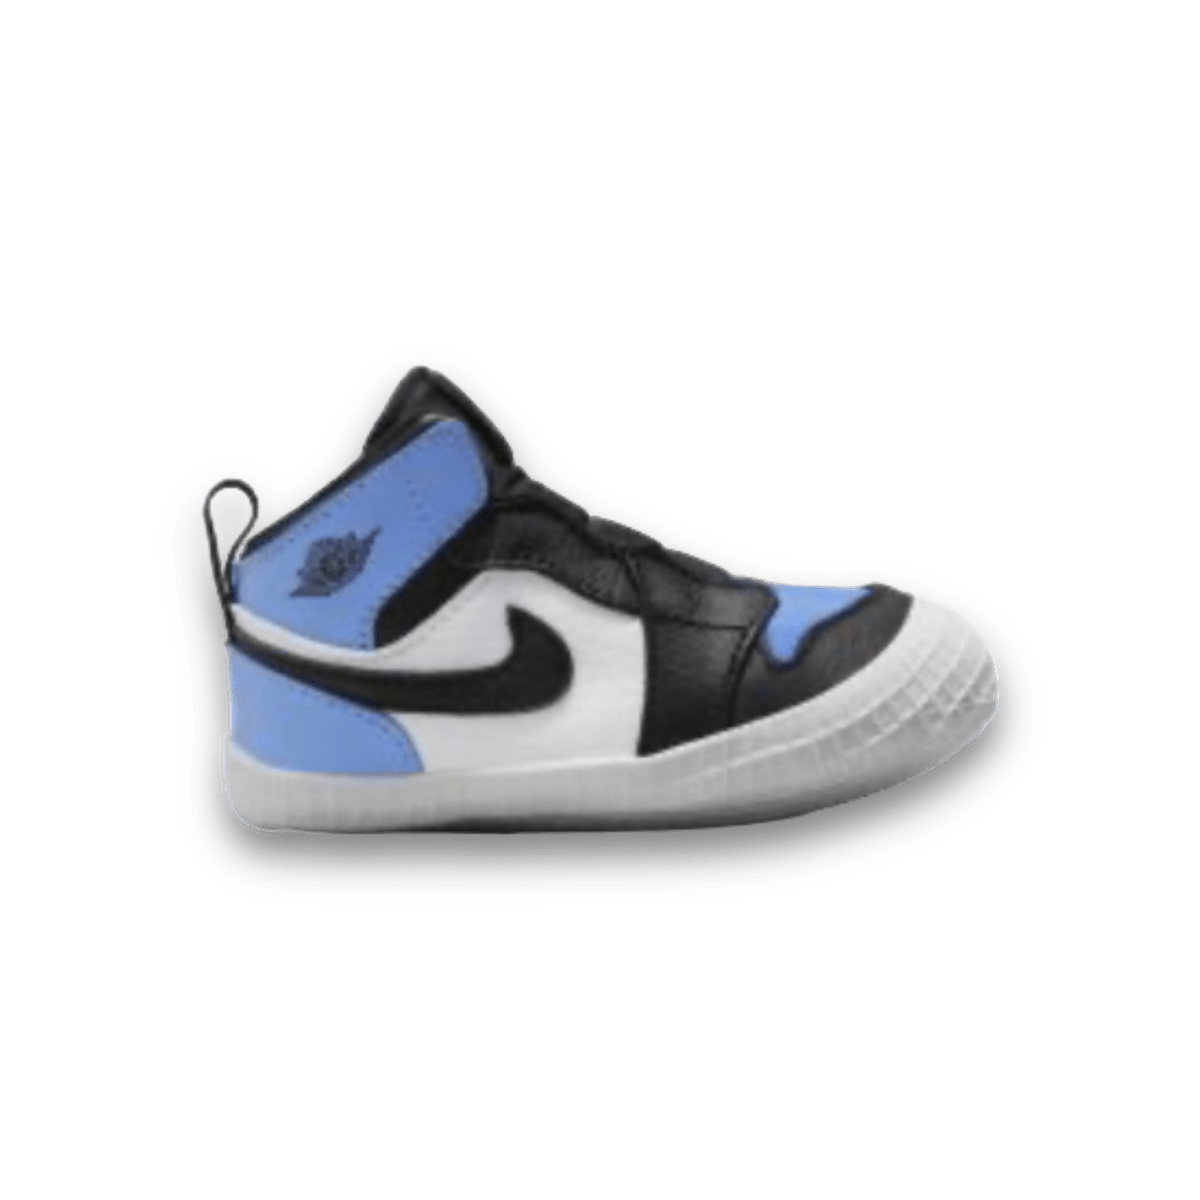 Air Jordan 1 Crib Bootie UNC Black Toe' - Toddler - High Sneaker - Jordan - Jawns on Fire - sneakers